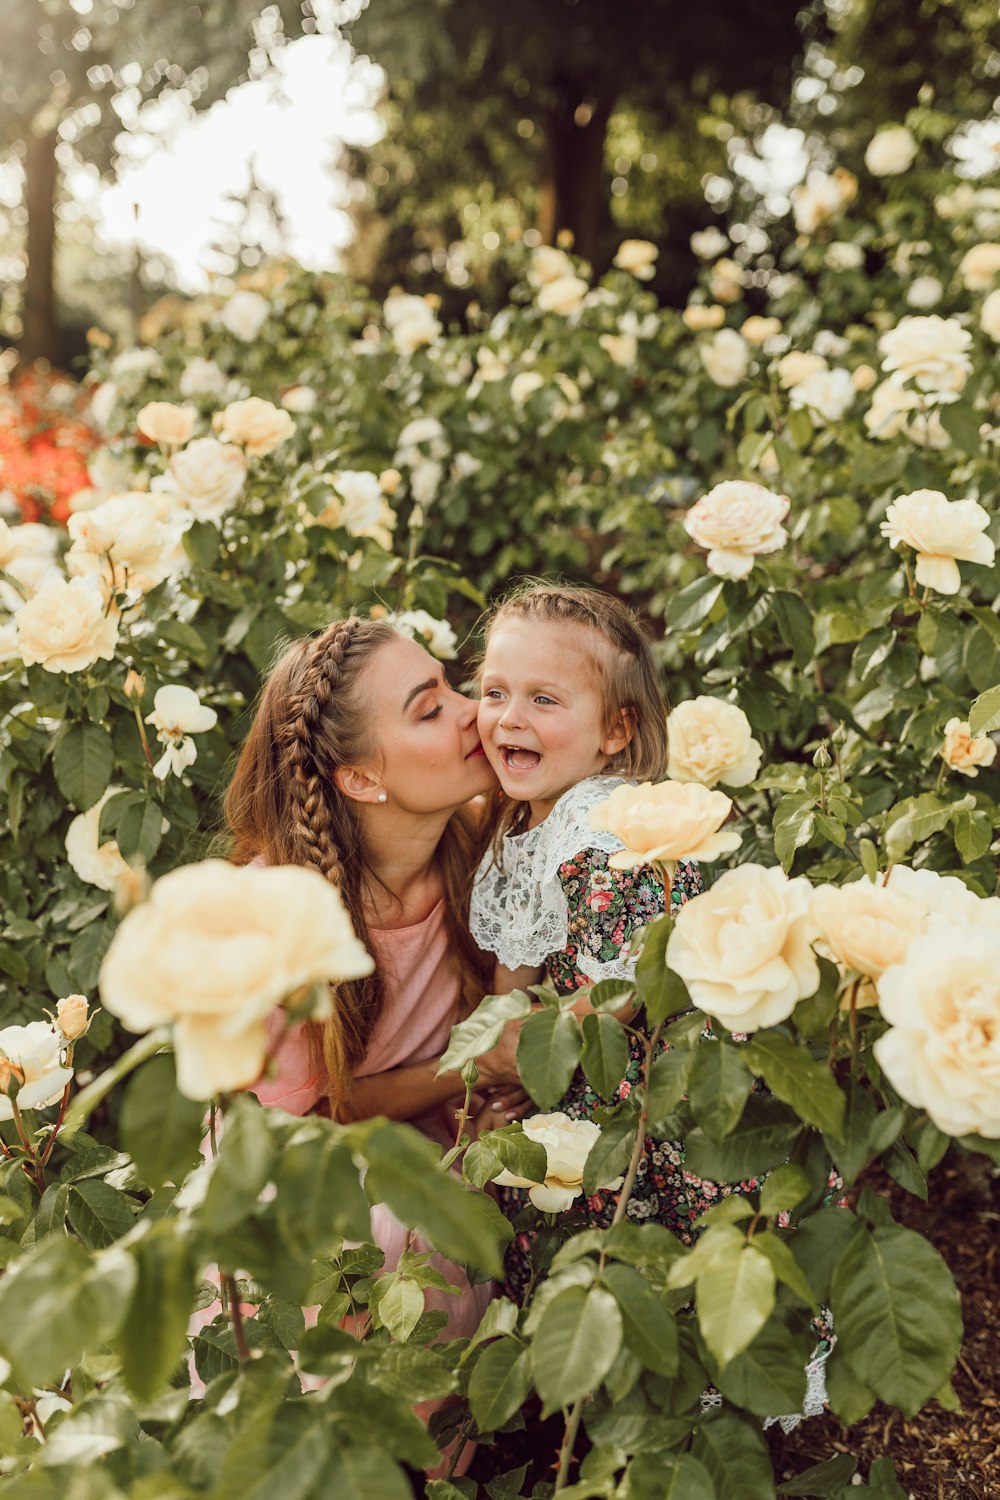 woman kissing girl's cheek between white roses garden